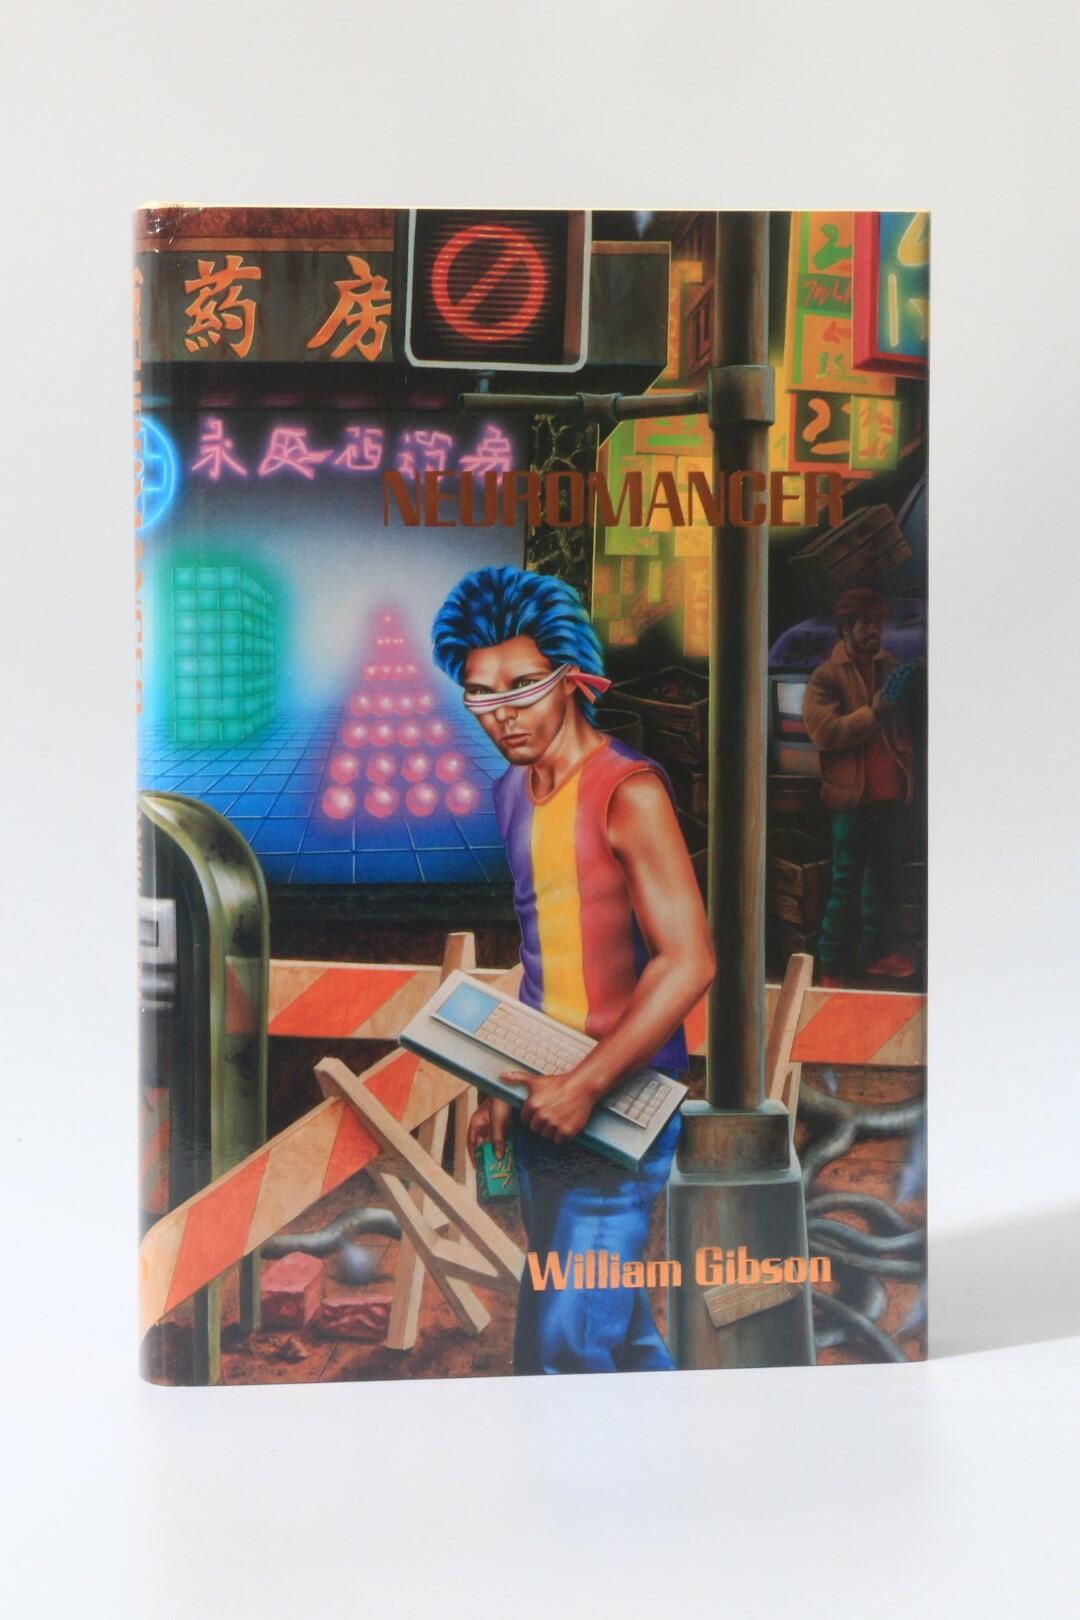 William Gibson - Neuromancer - Phantasia Press, 1986, First Edition.